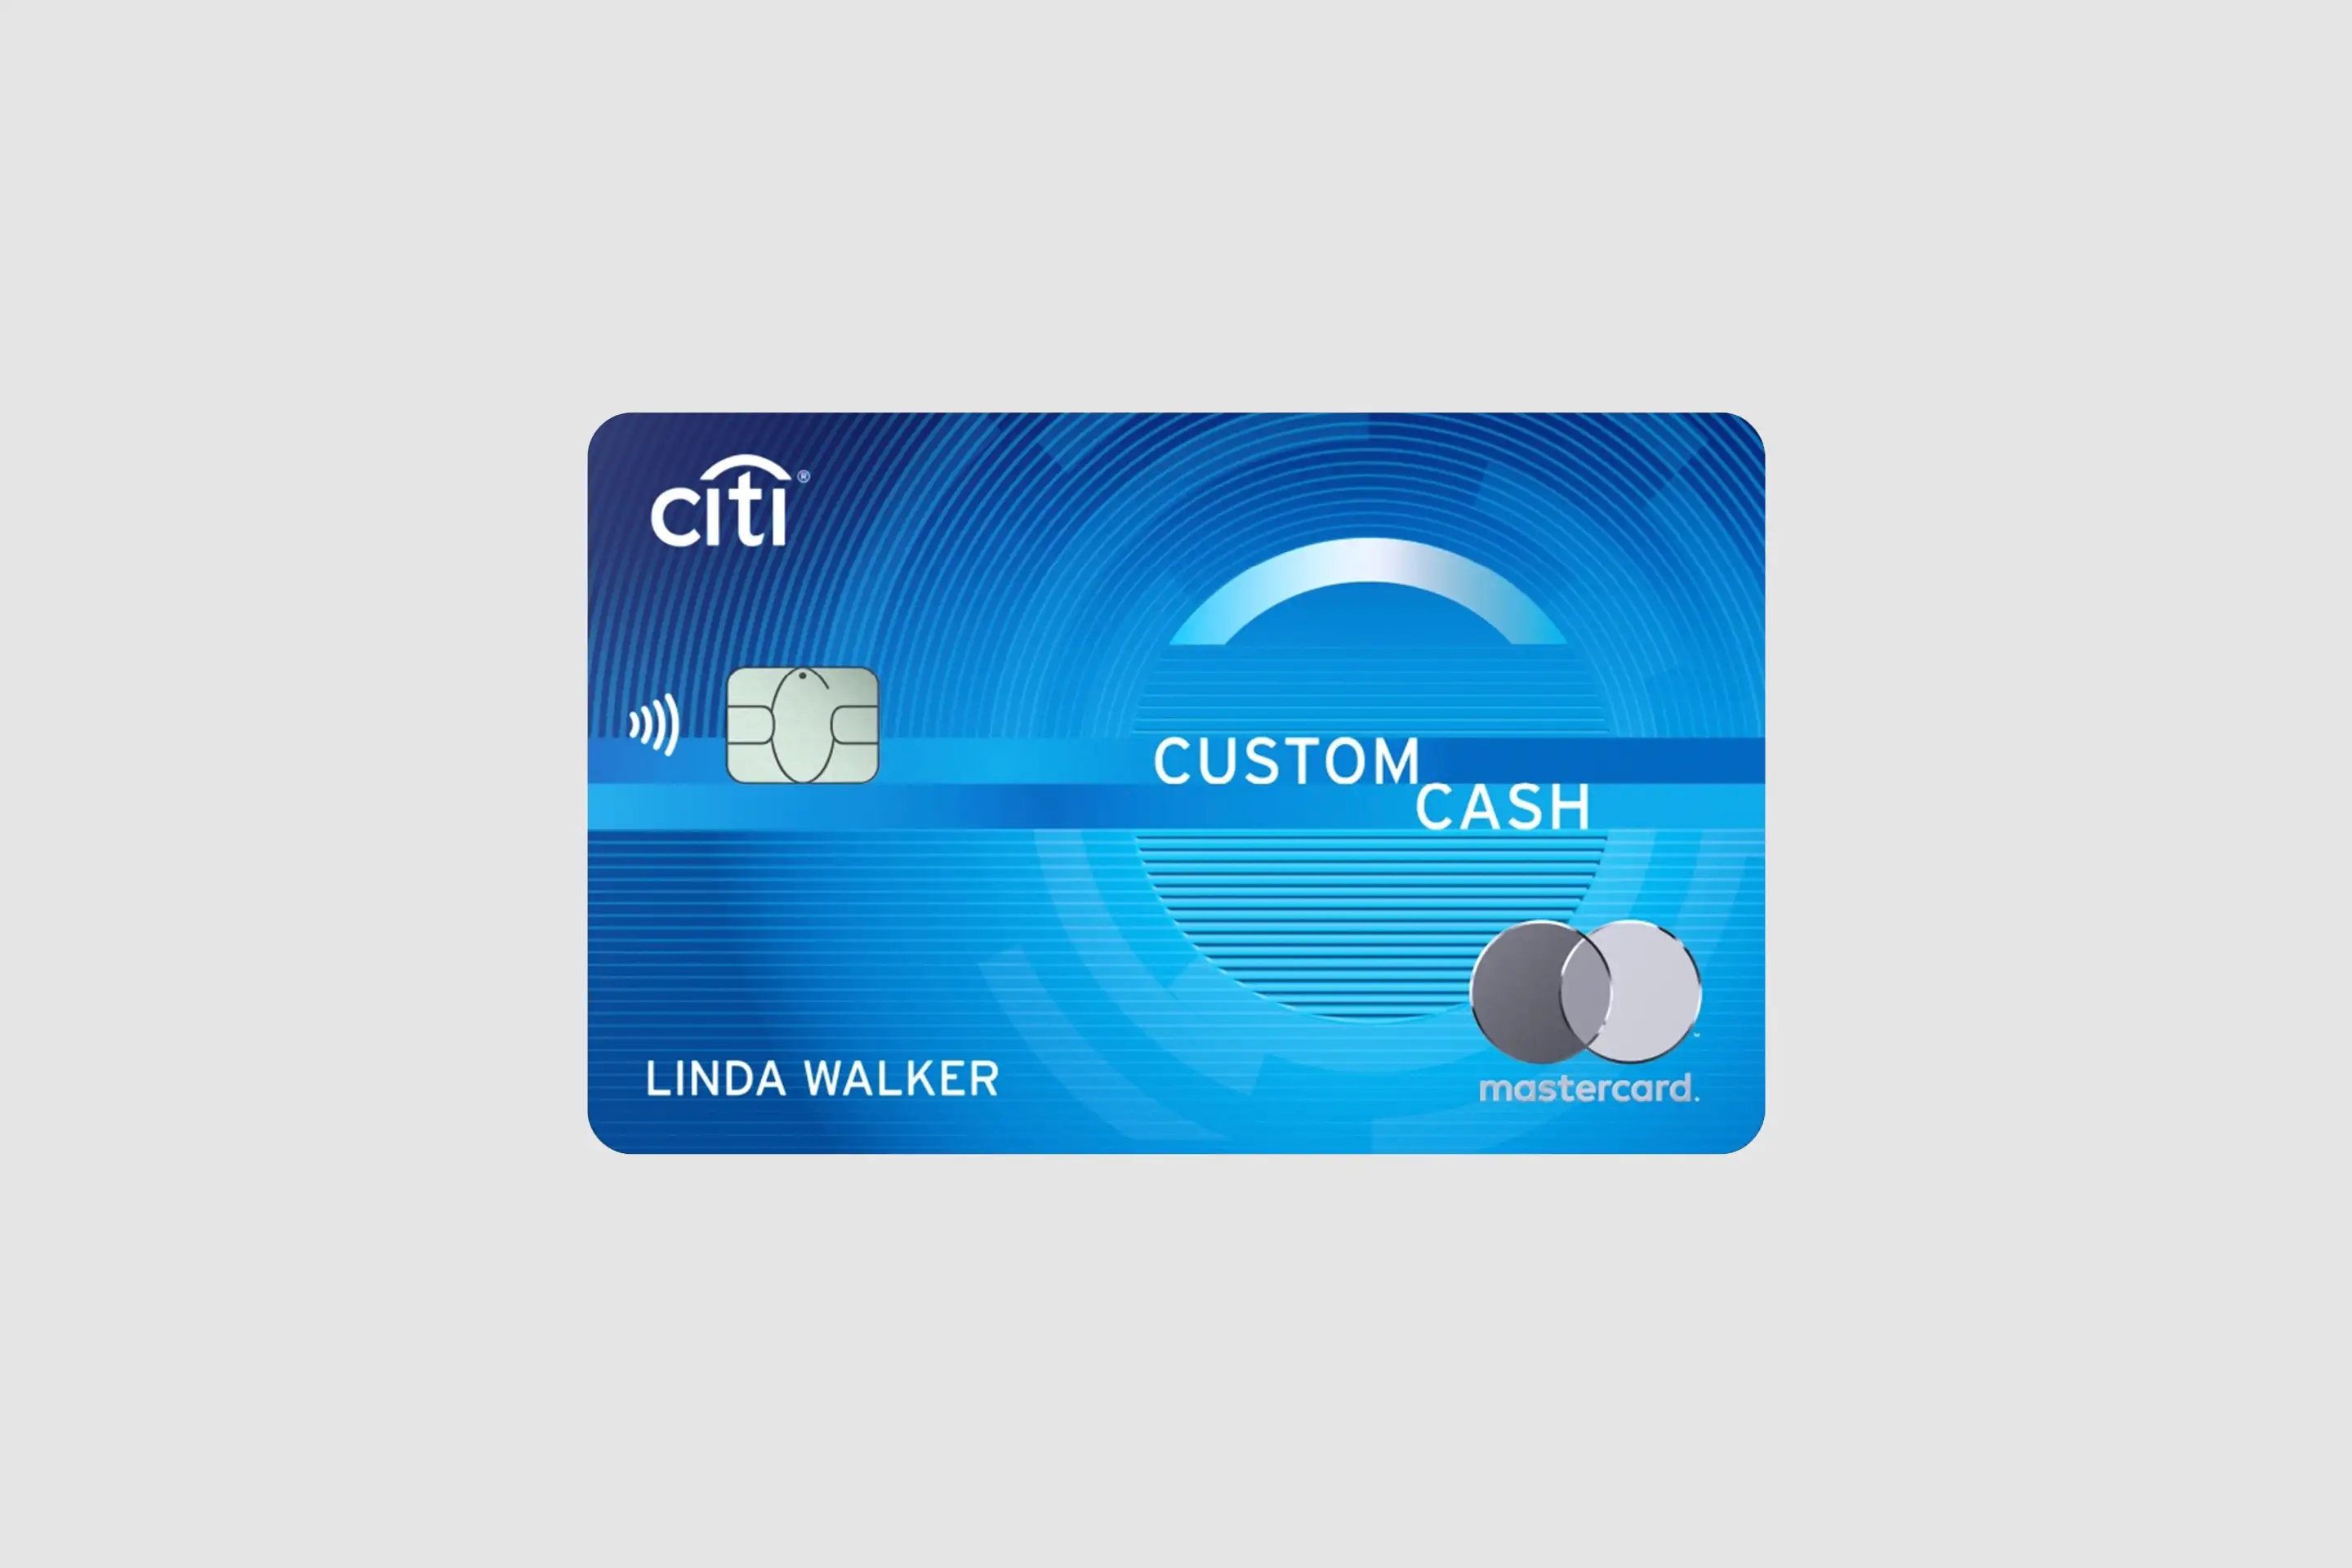 Citi Custom Cash Credit Card